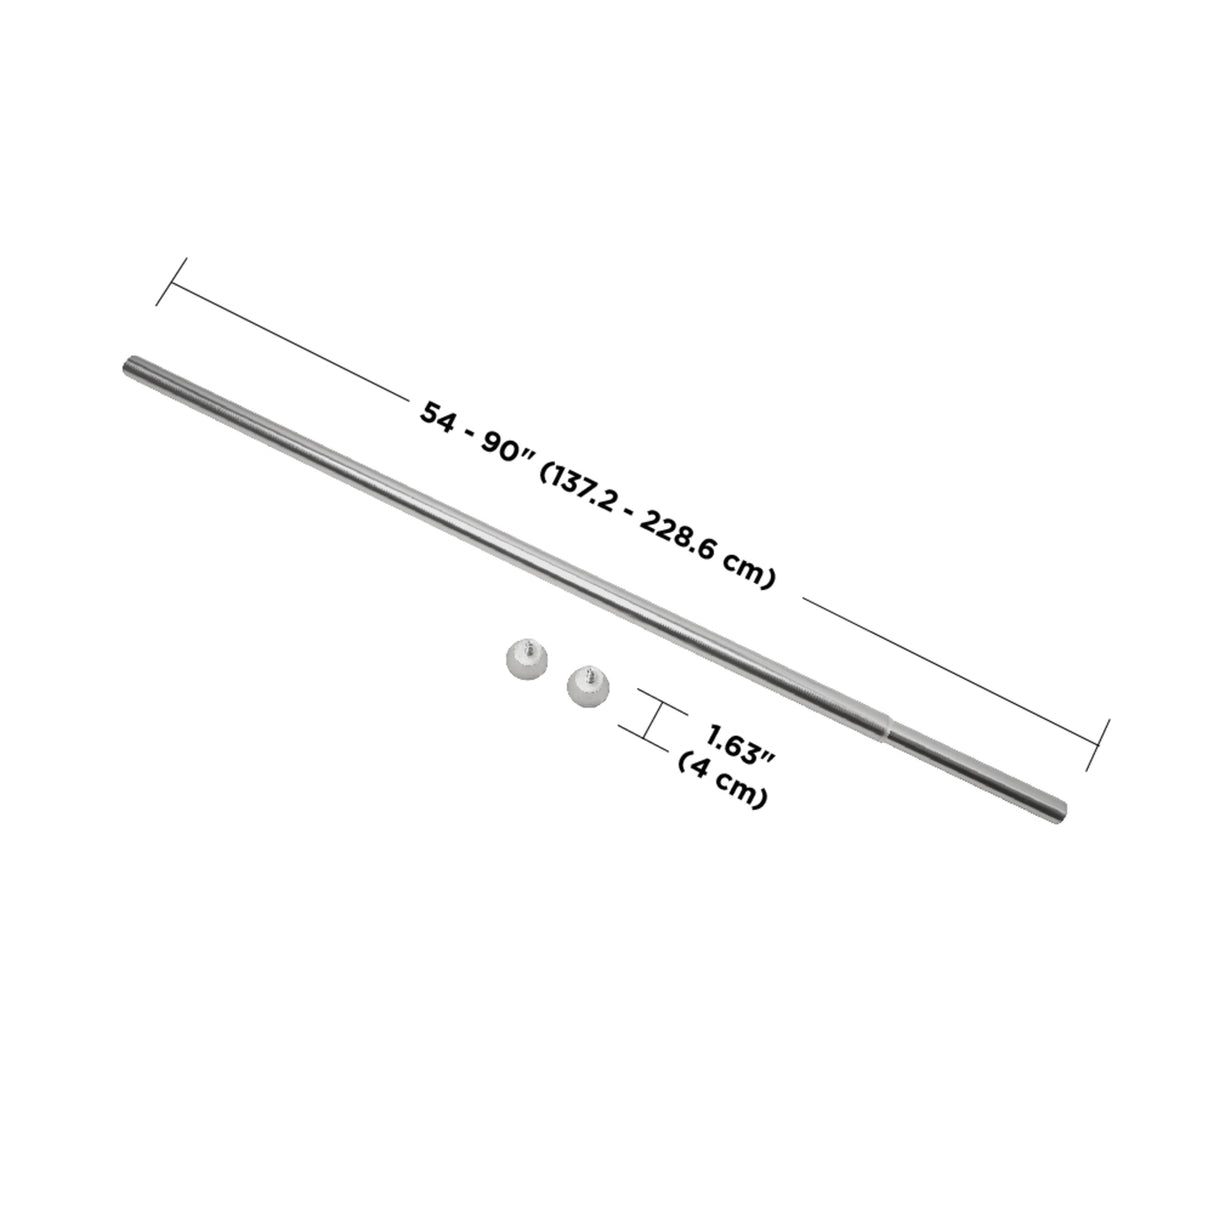 Tension Rods | color: Nickel | size: 54-90" (137-229 cm) | diameter: 7/8" (2.2 cm)